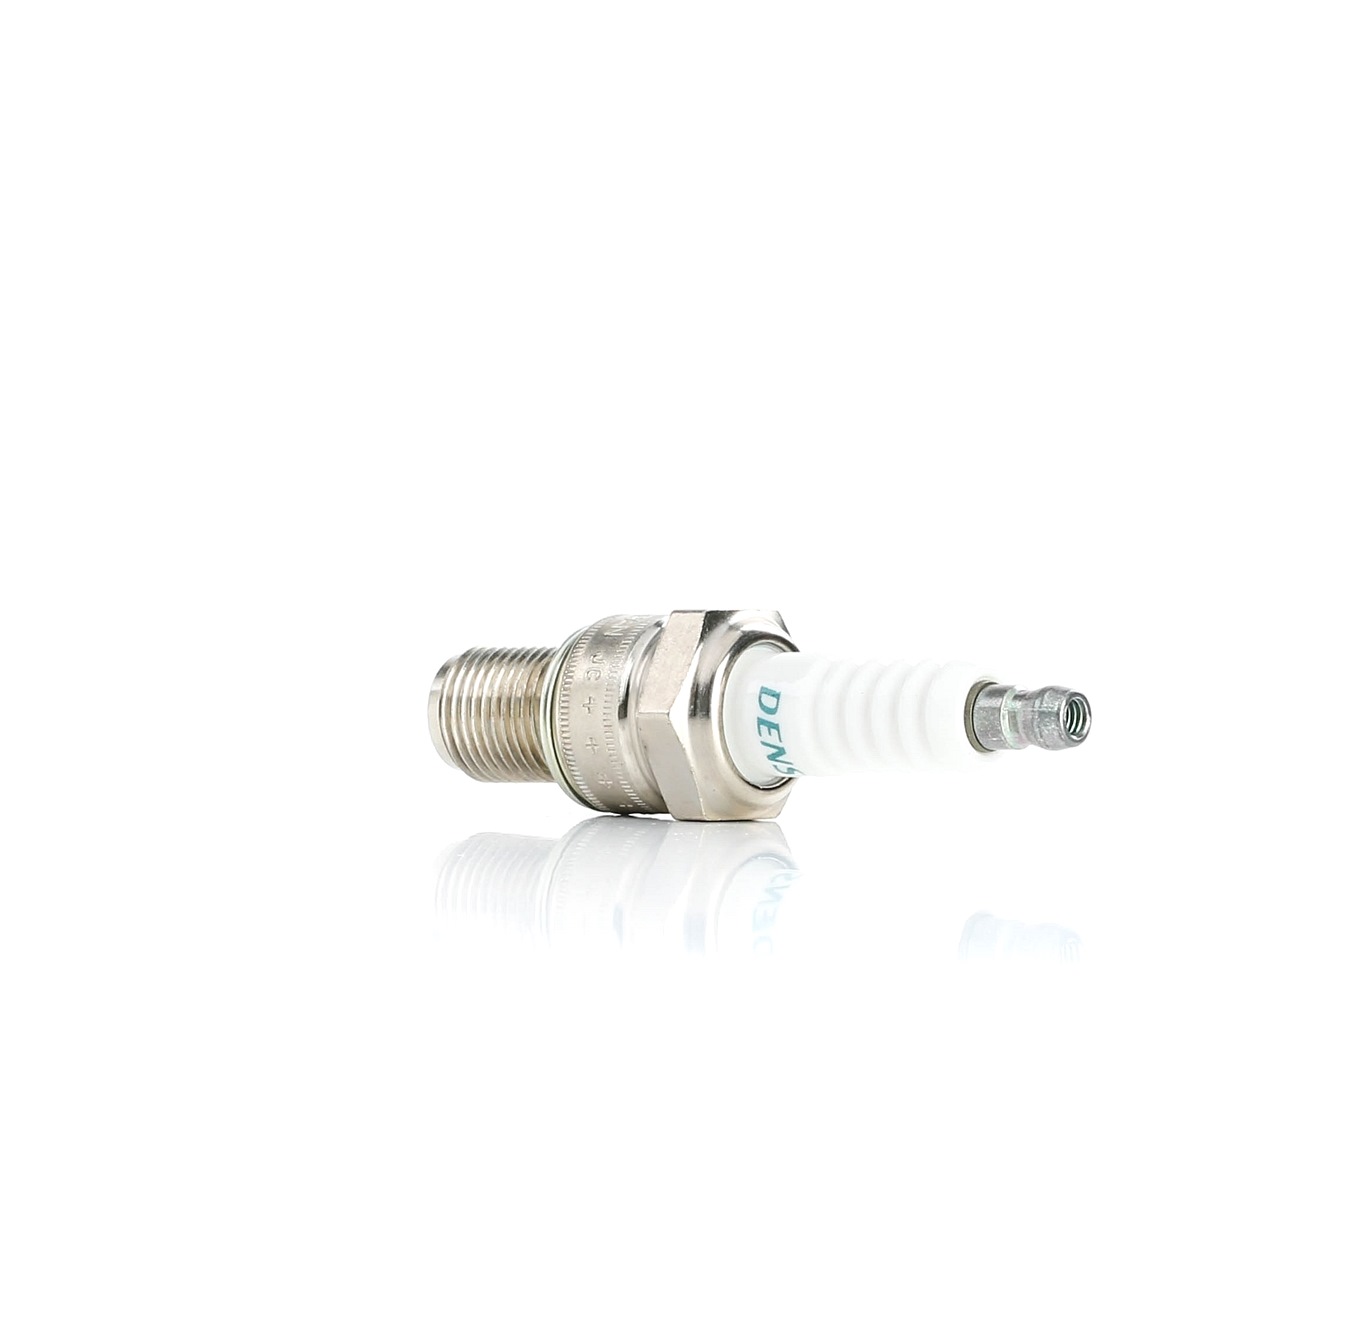 5317 DENSO Iridium Power Spanner size: 20.6 Spark Plug IW27 cheap